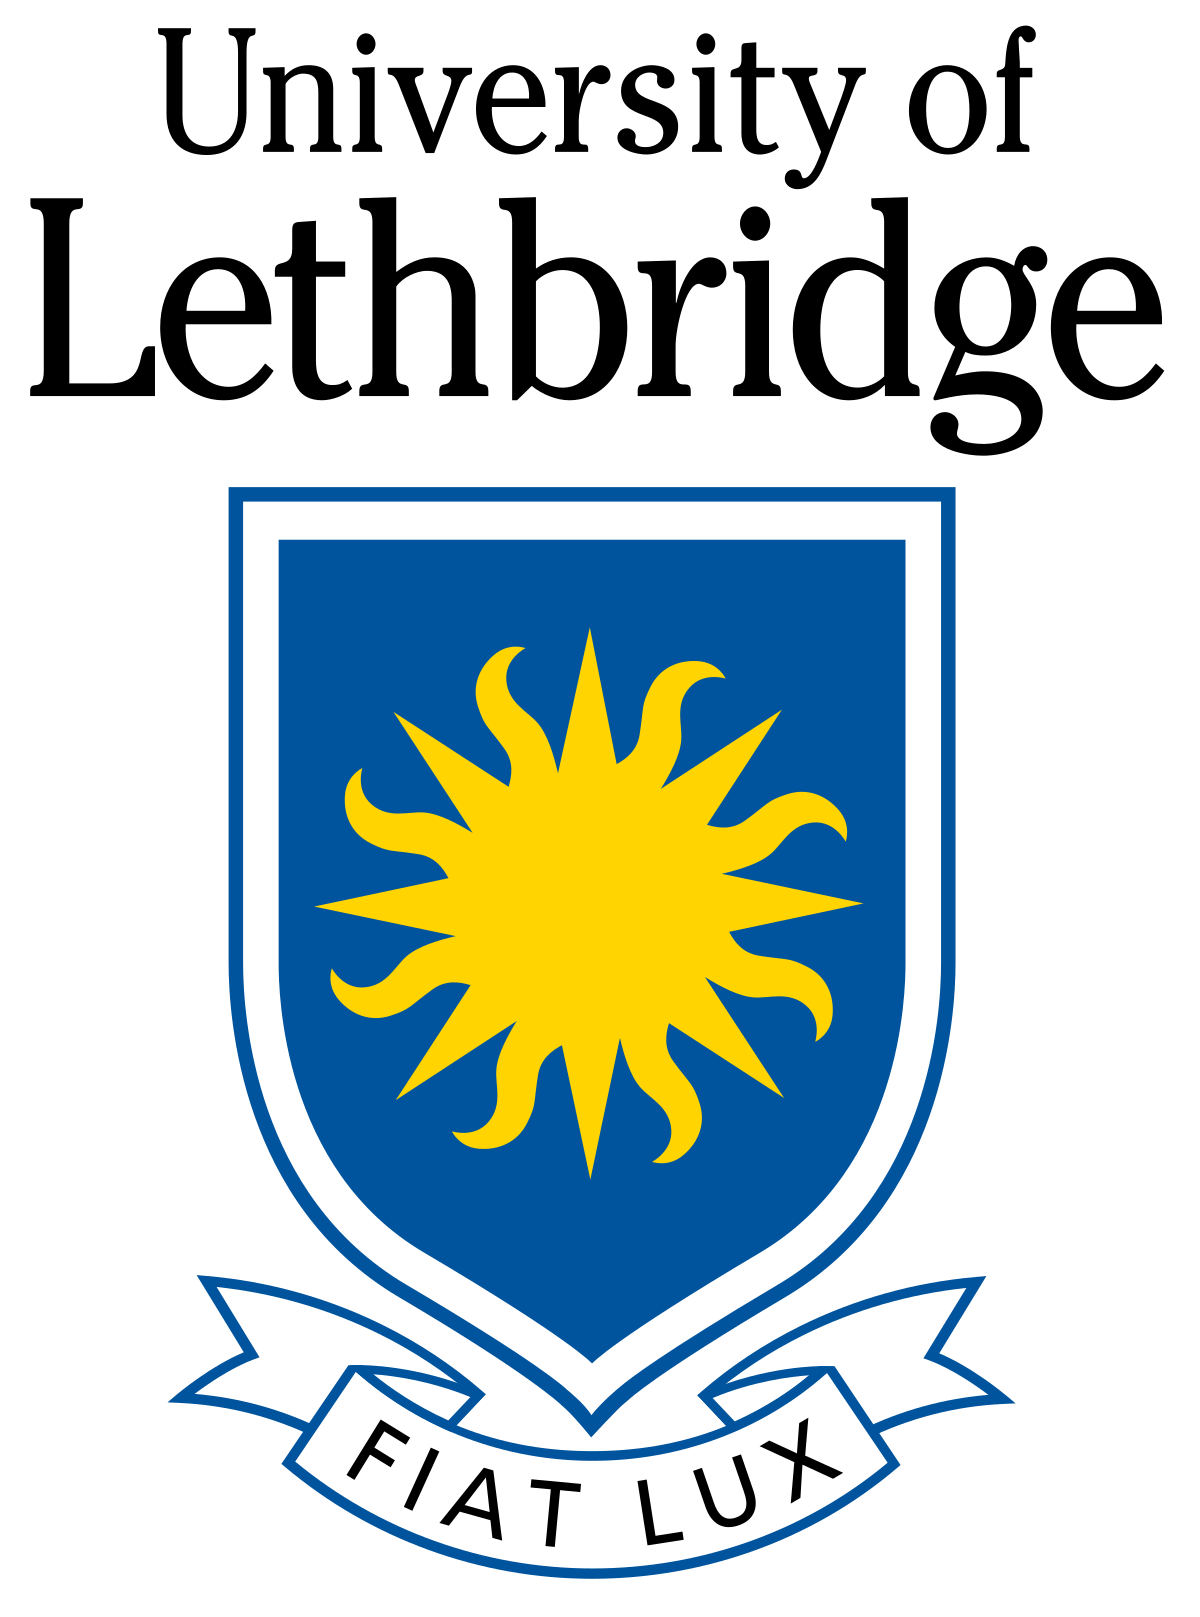 U of L Mascot Logo - University of Lethbridge